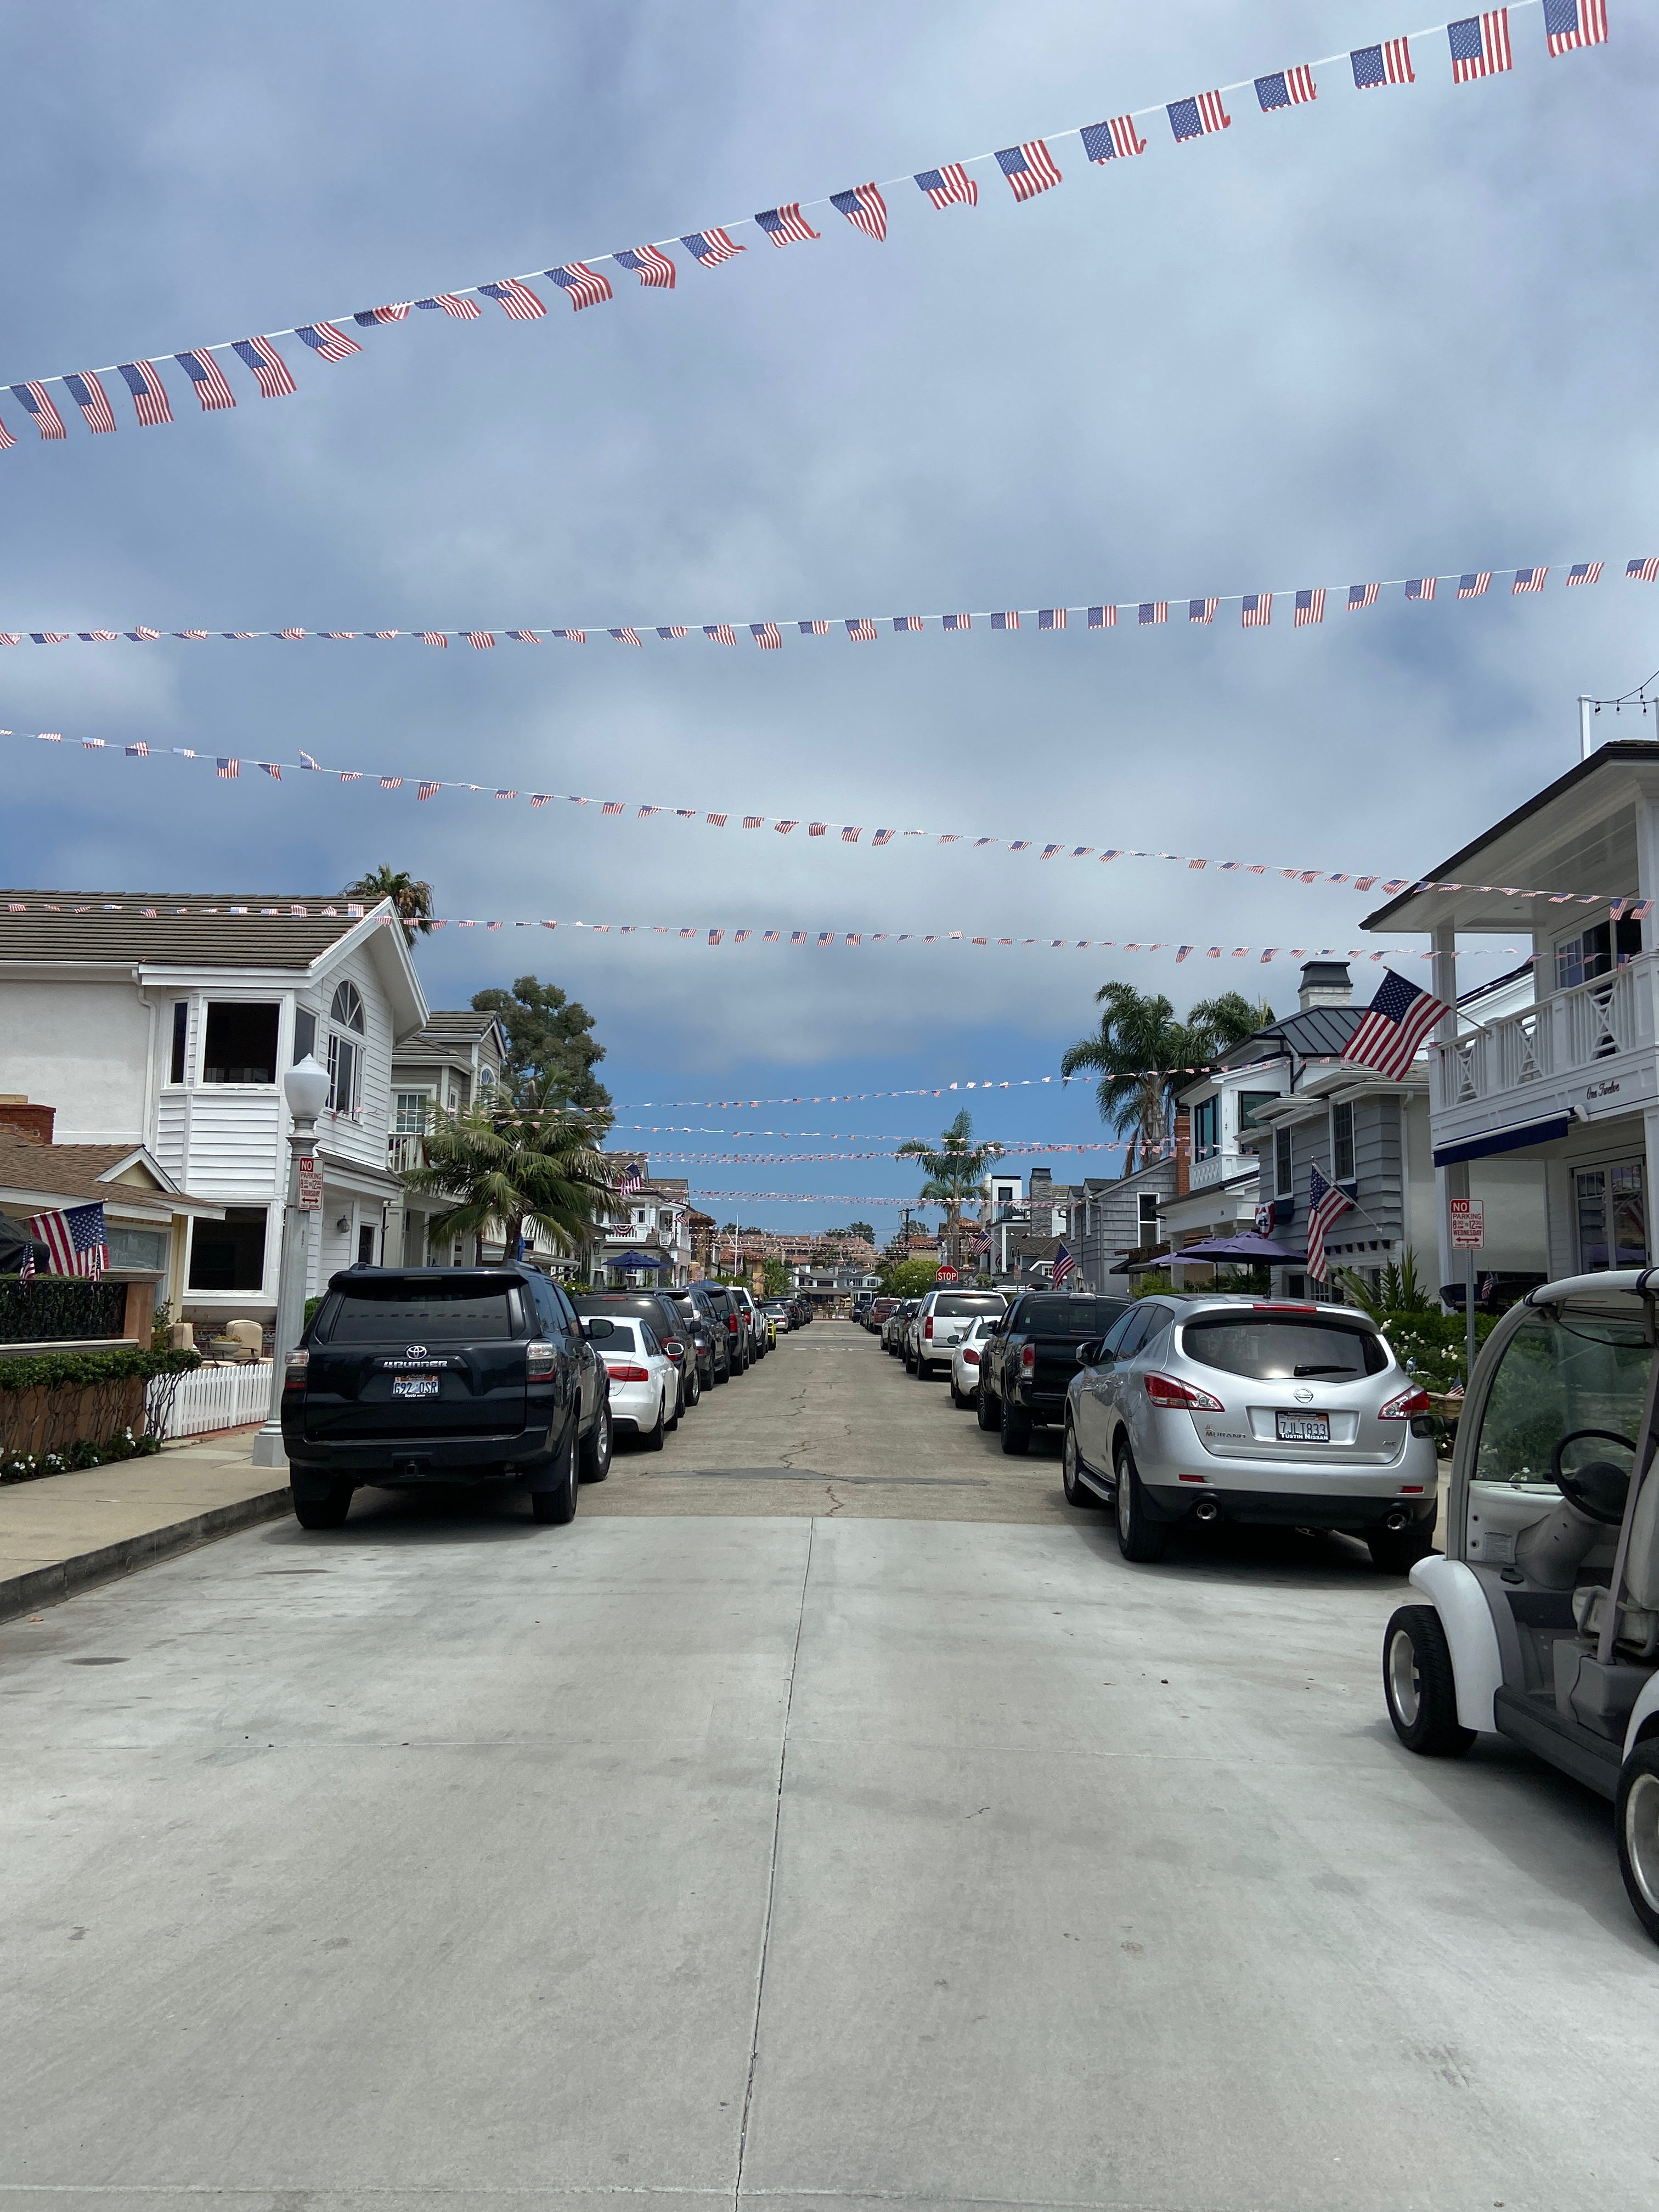 Balboa Island flags